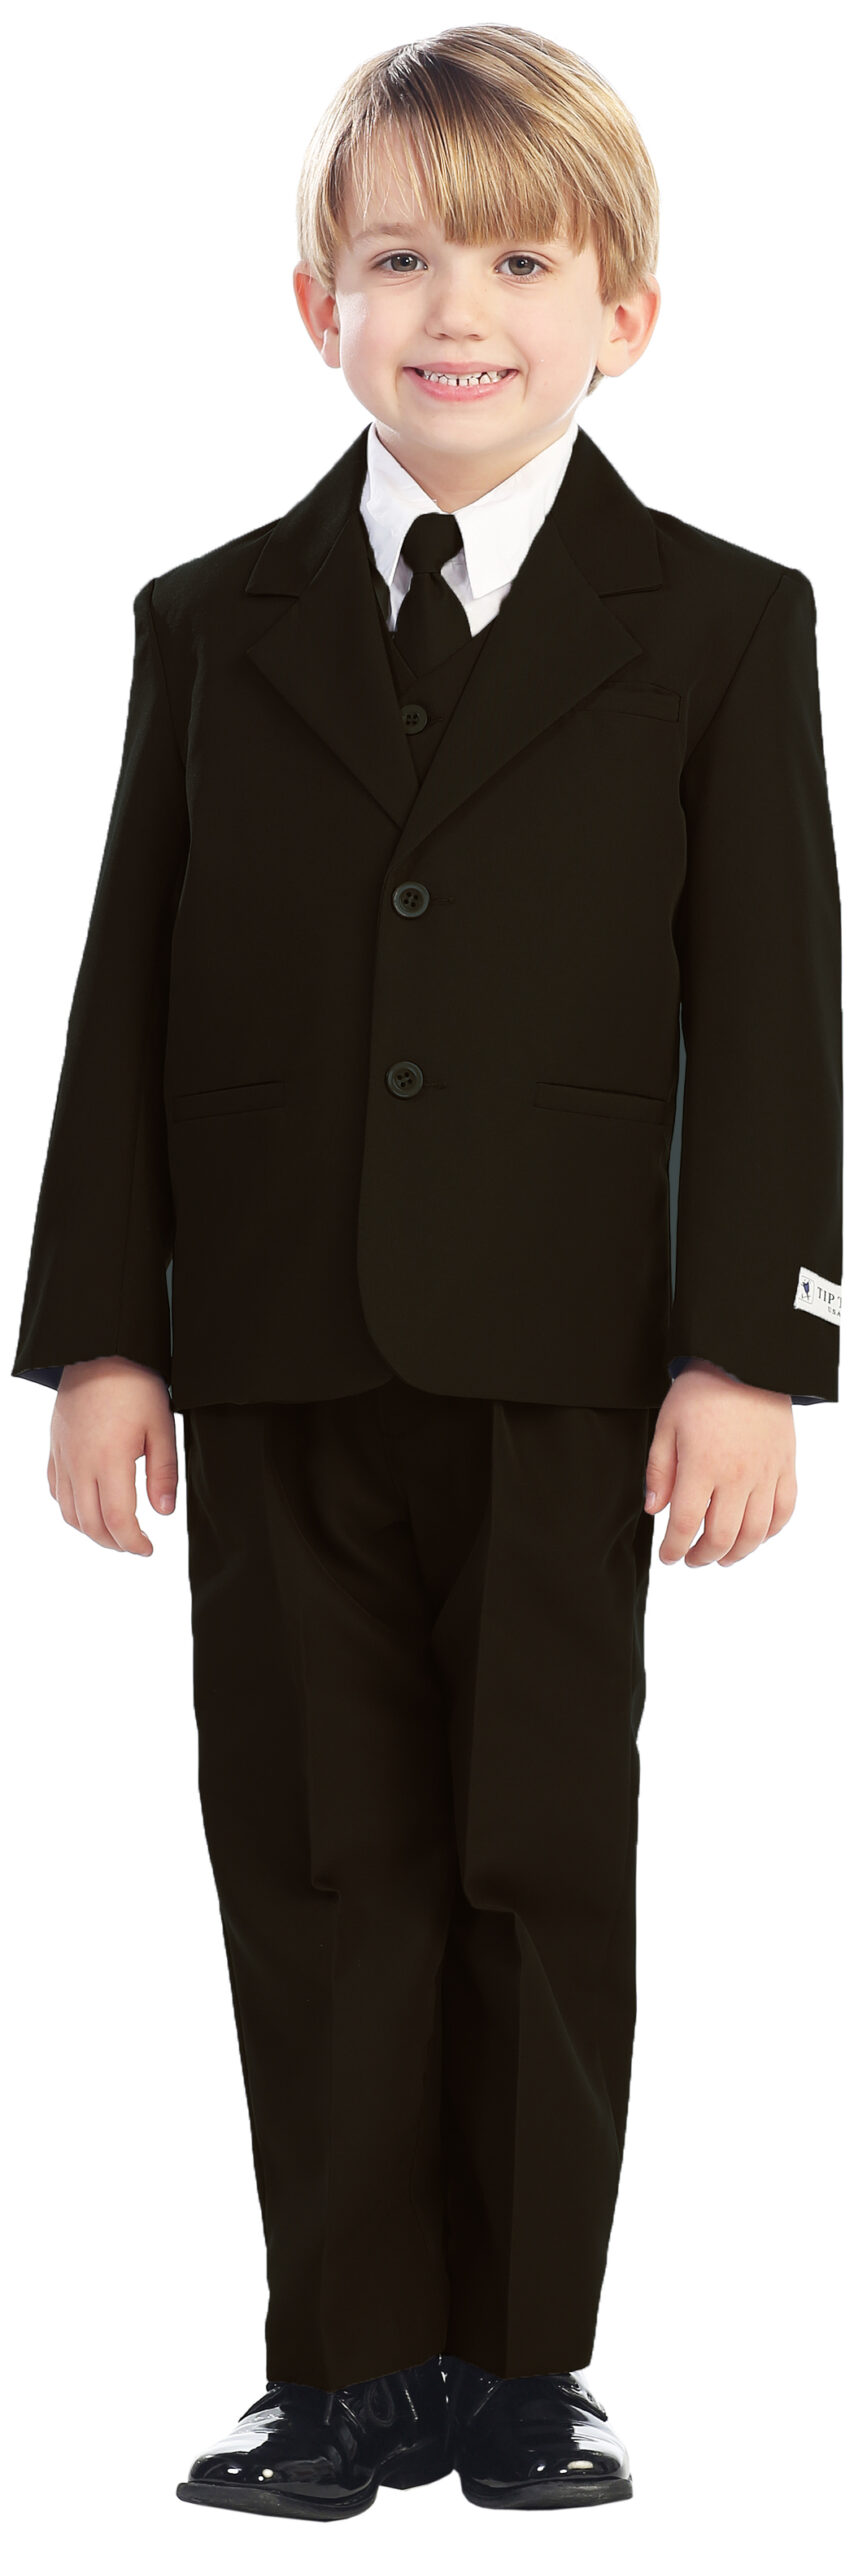 Avery Hill 5-Piece Boy's 2-Button Dress Suit Full-Back Vest - Brown Size 2